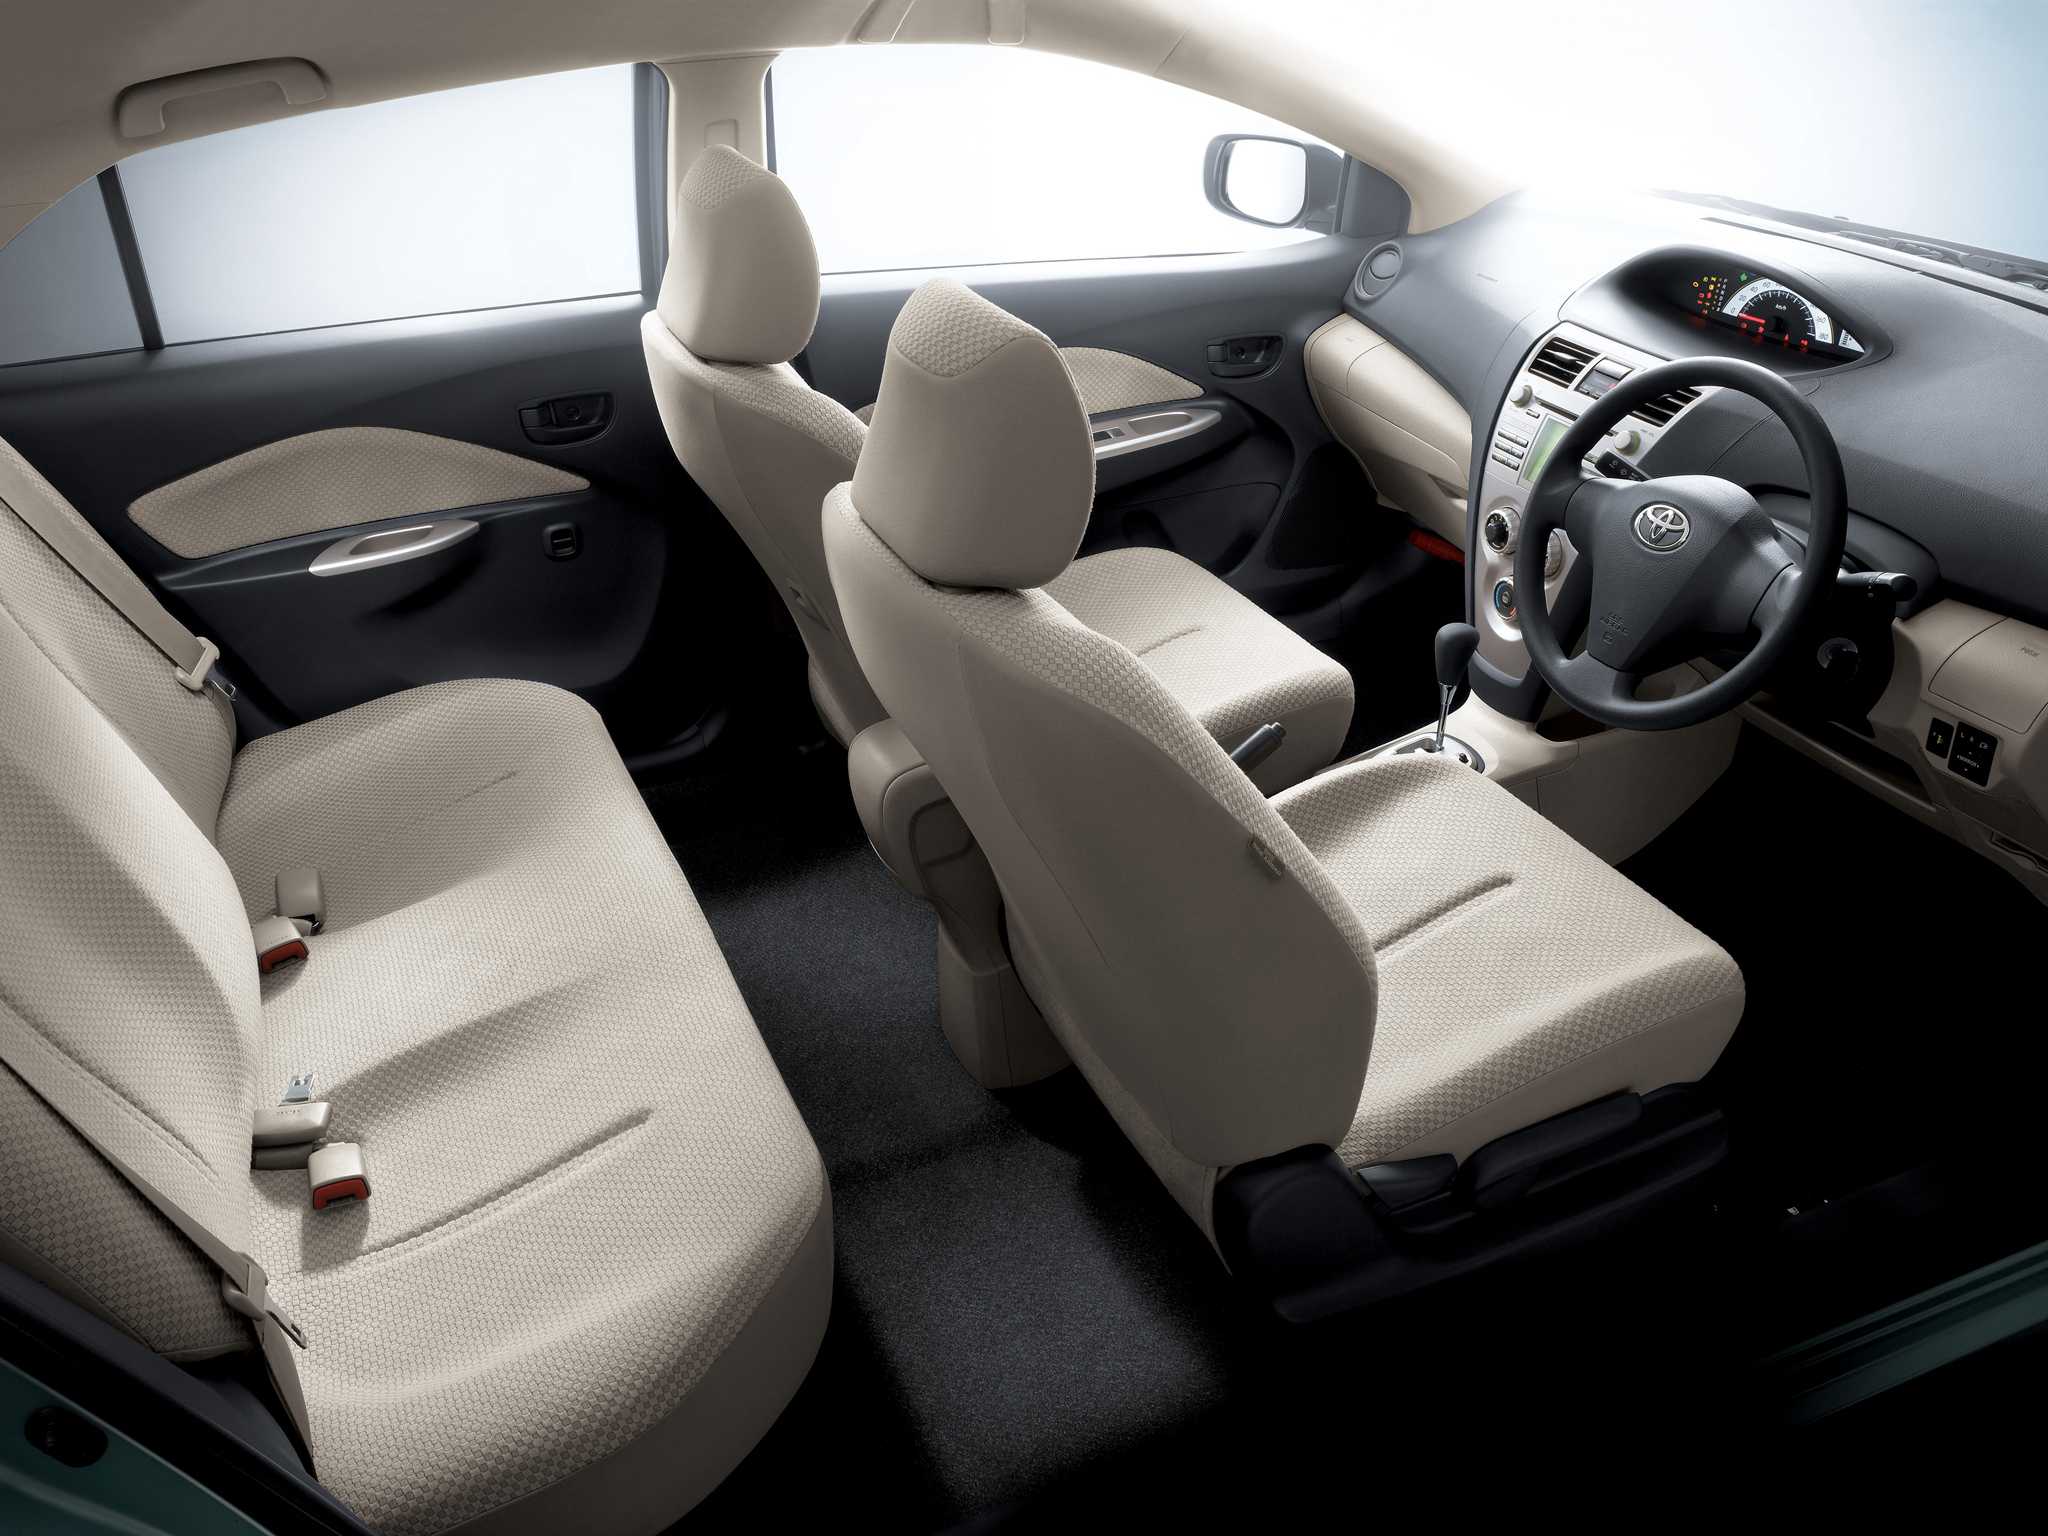 Toyota Belta interior - Seats